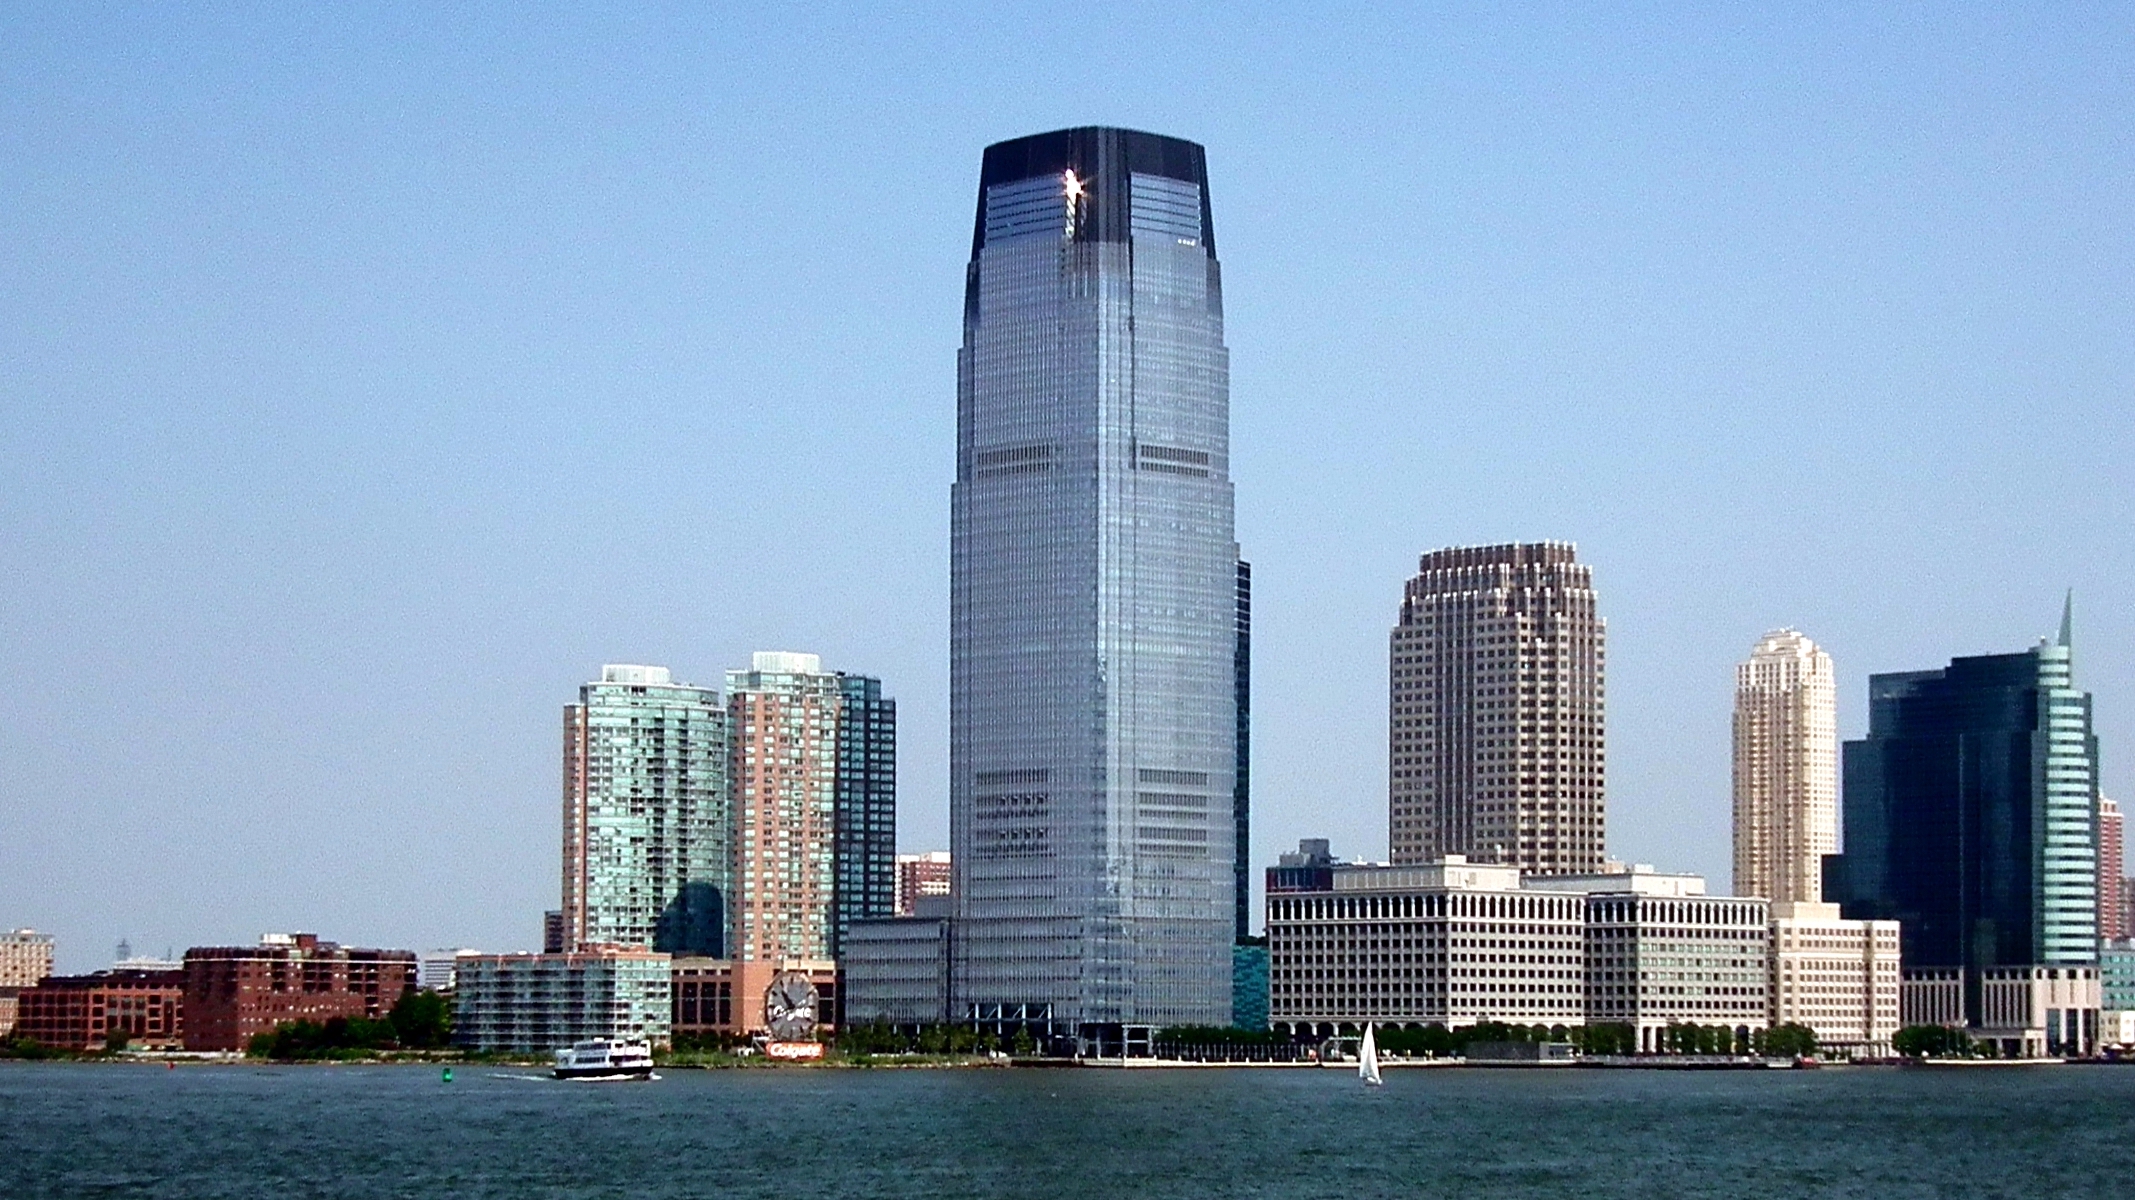 large skyscraper along riverbank